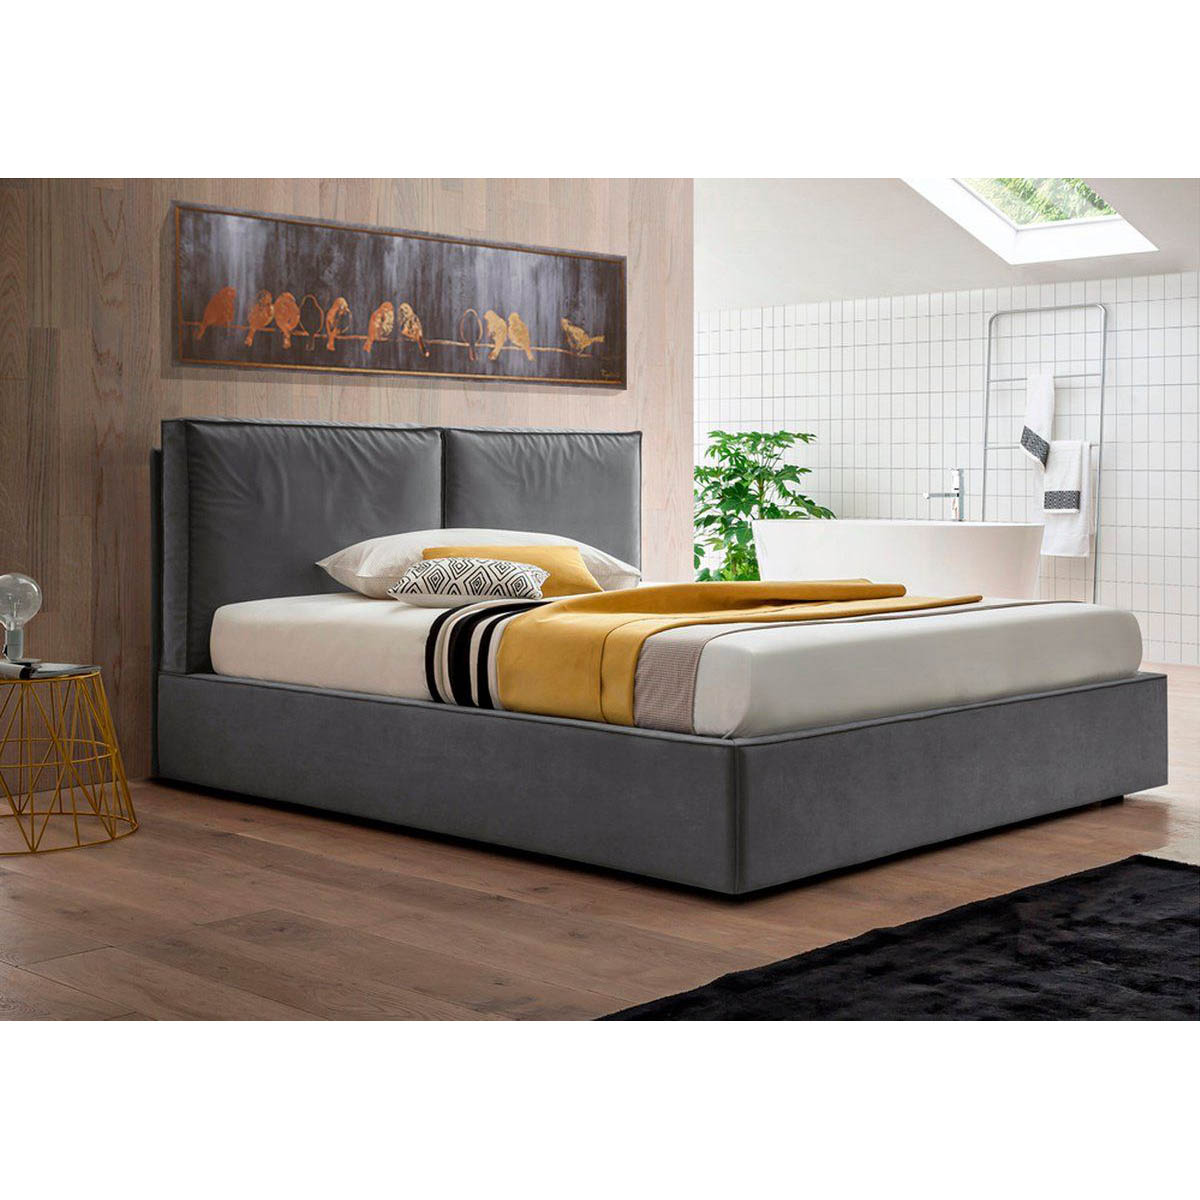 Bed - multiple sizes - TEM136